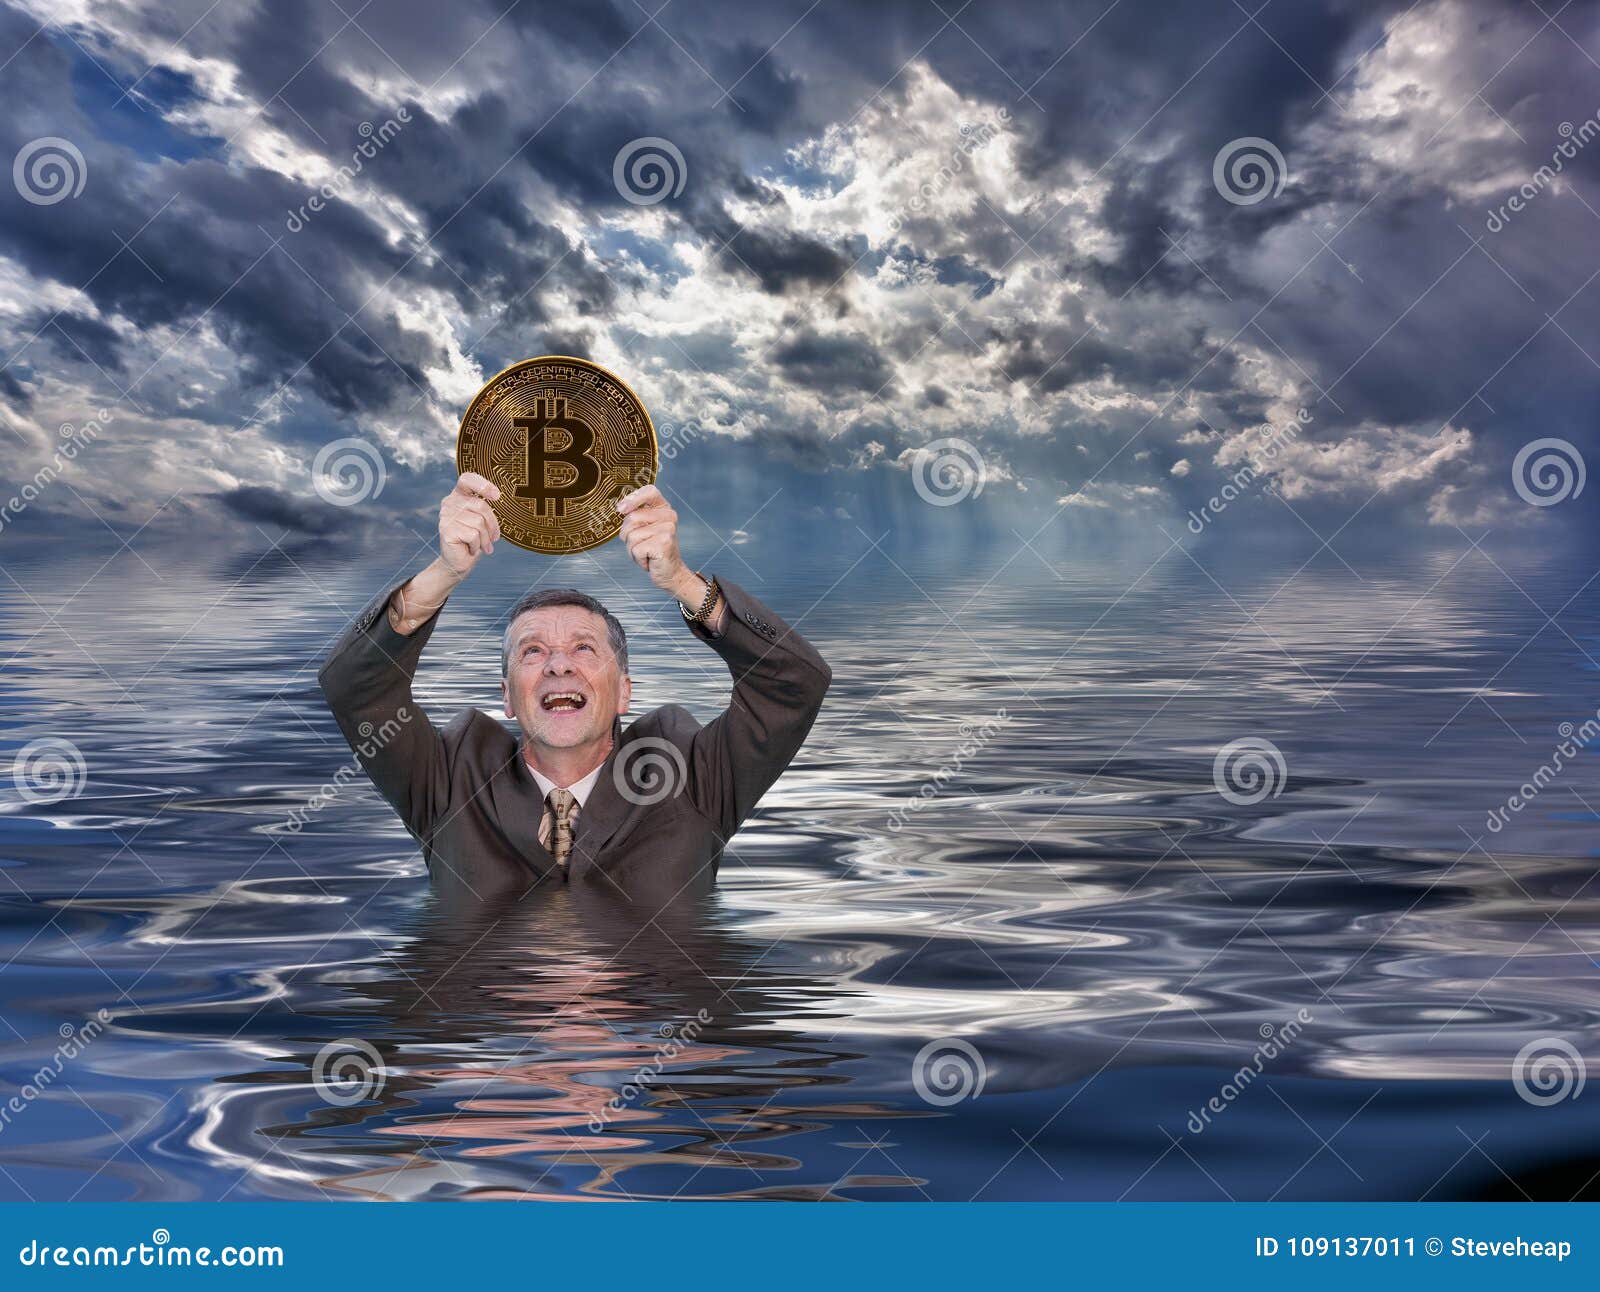 crypto drowning